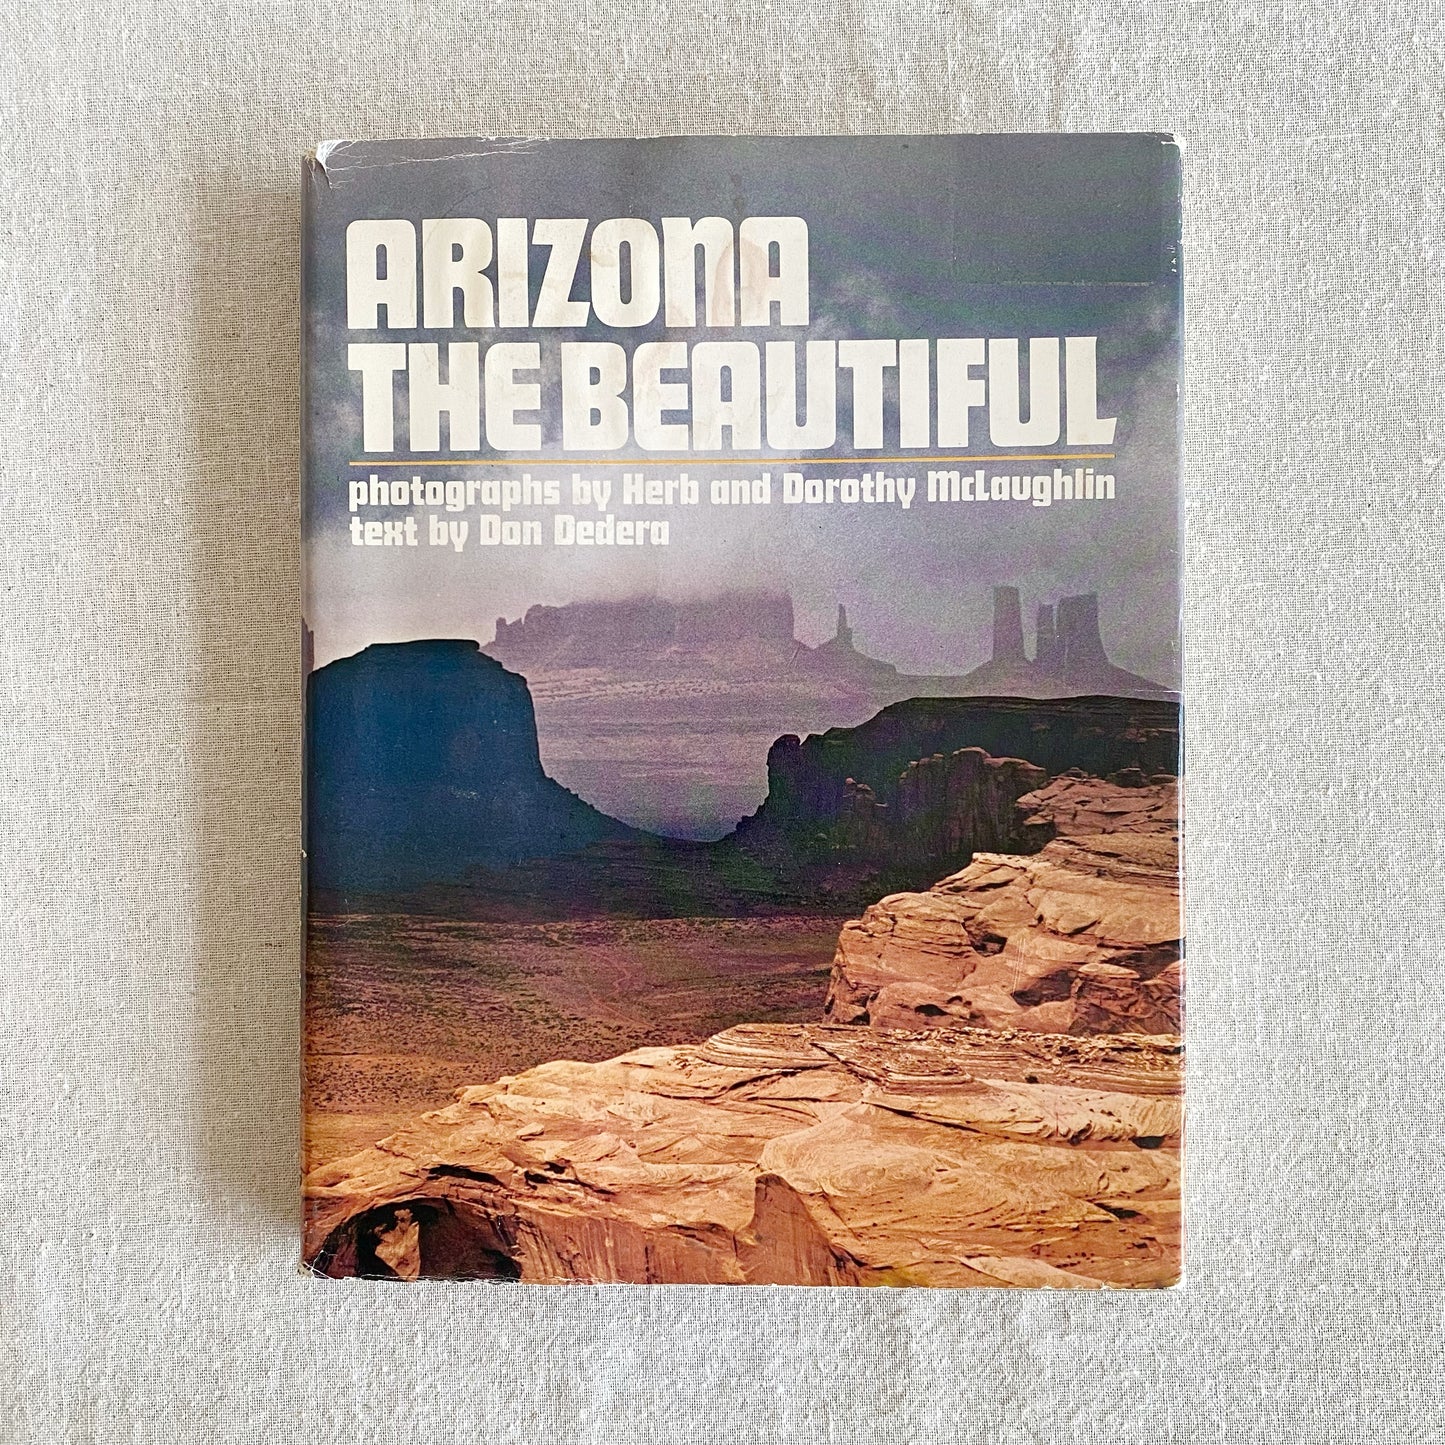 Book: Arizona the Beautiful